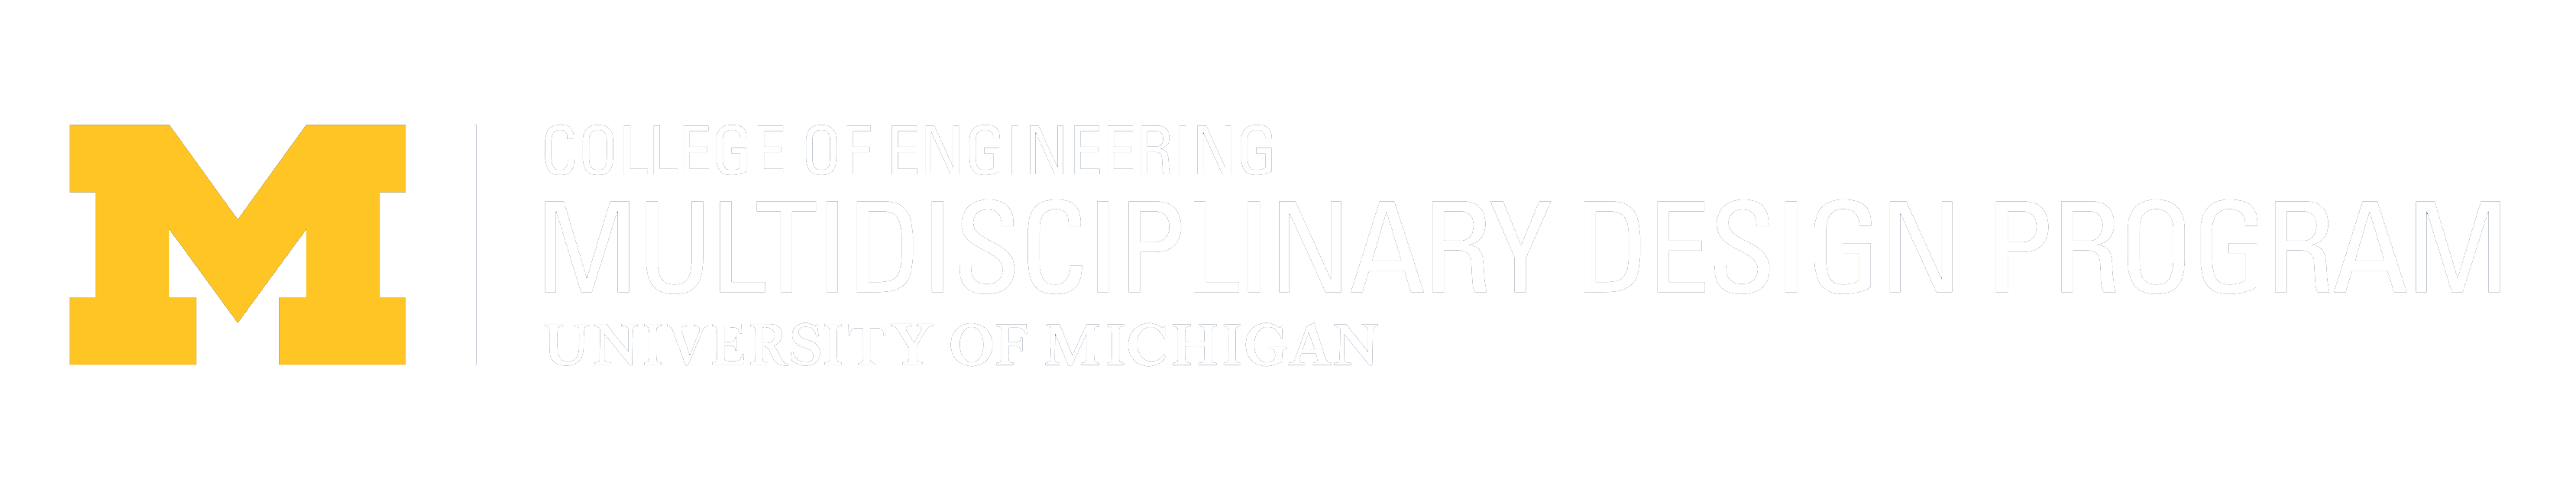 Maize block "M" and "Multidisciplinary Design Program, University of Michigan"